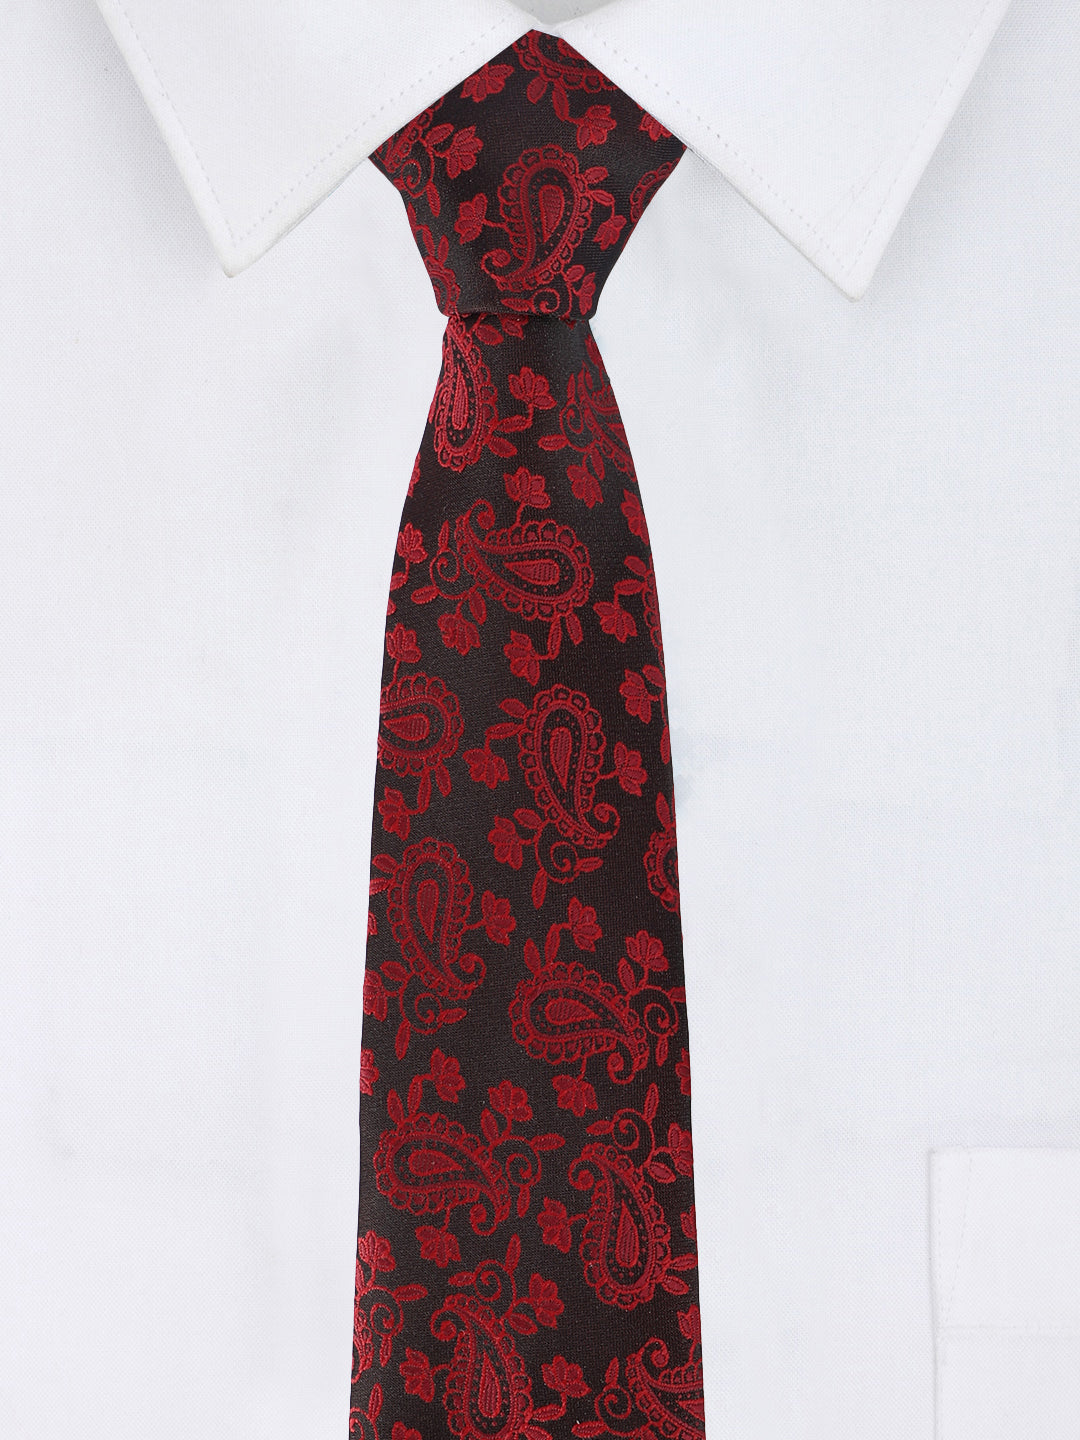 Alvaro Castagnino Microfiber RED AND BLACK Colored Necktie for Men